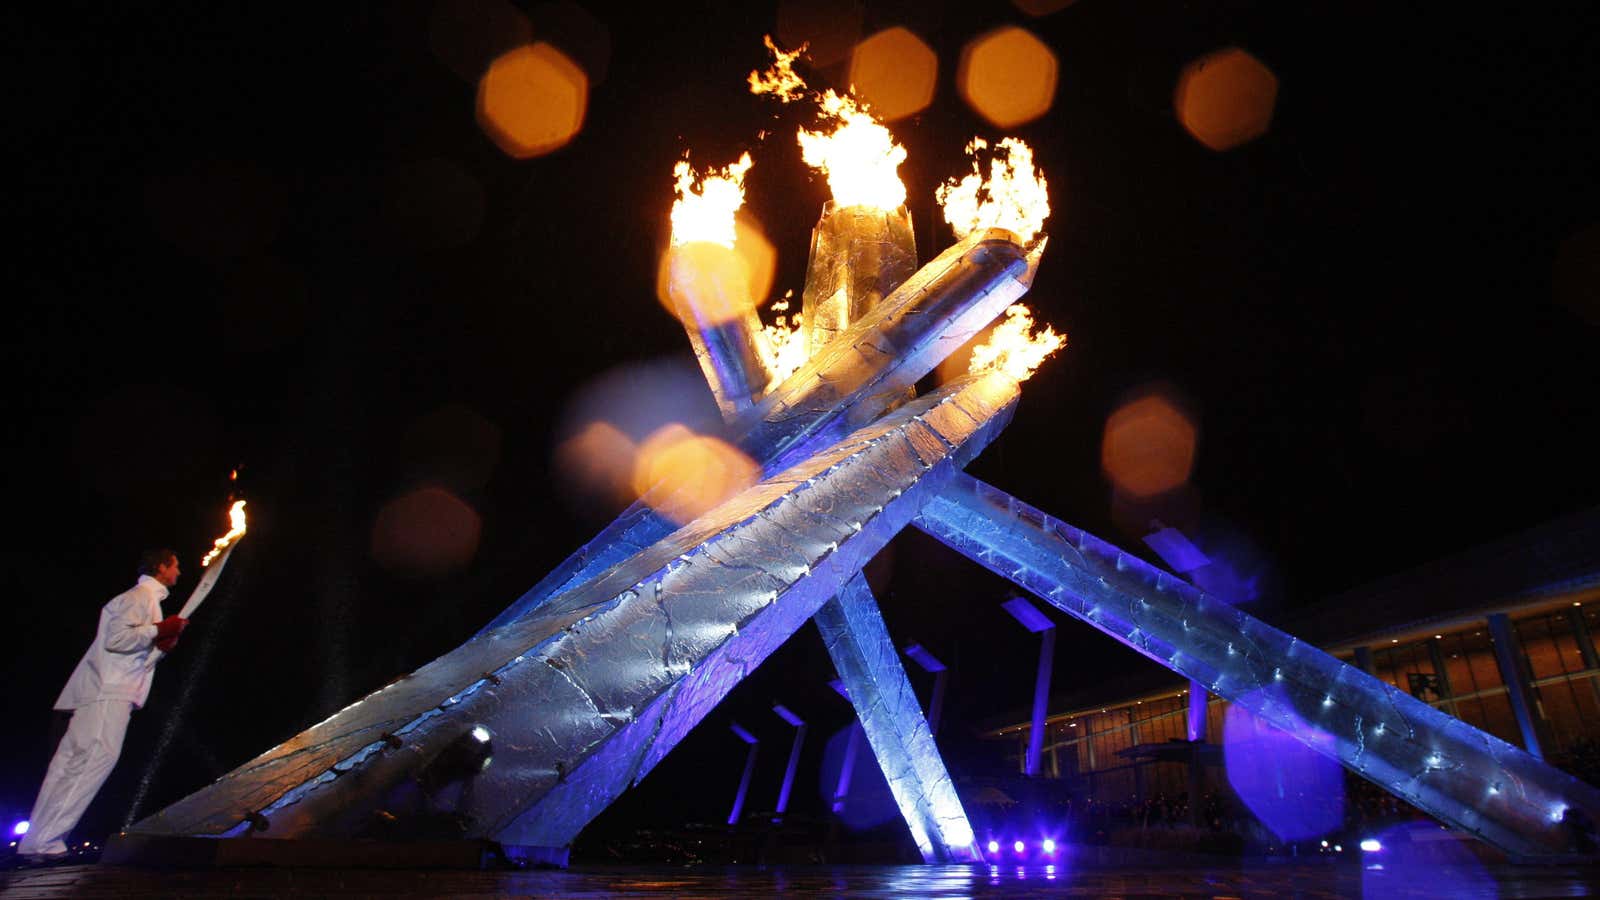 Canadian hockey legend Wayne Gretzky lights the cauldron in the 2010 Winter Olympics     (Reuters/Hans Deryk)